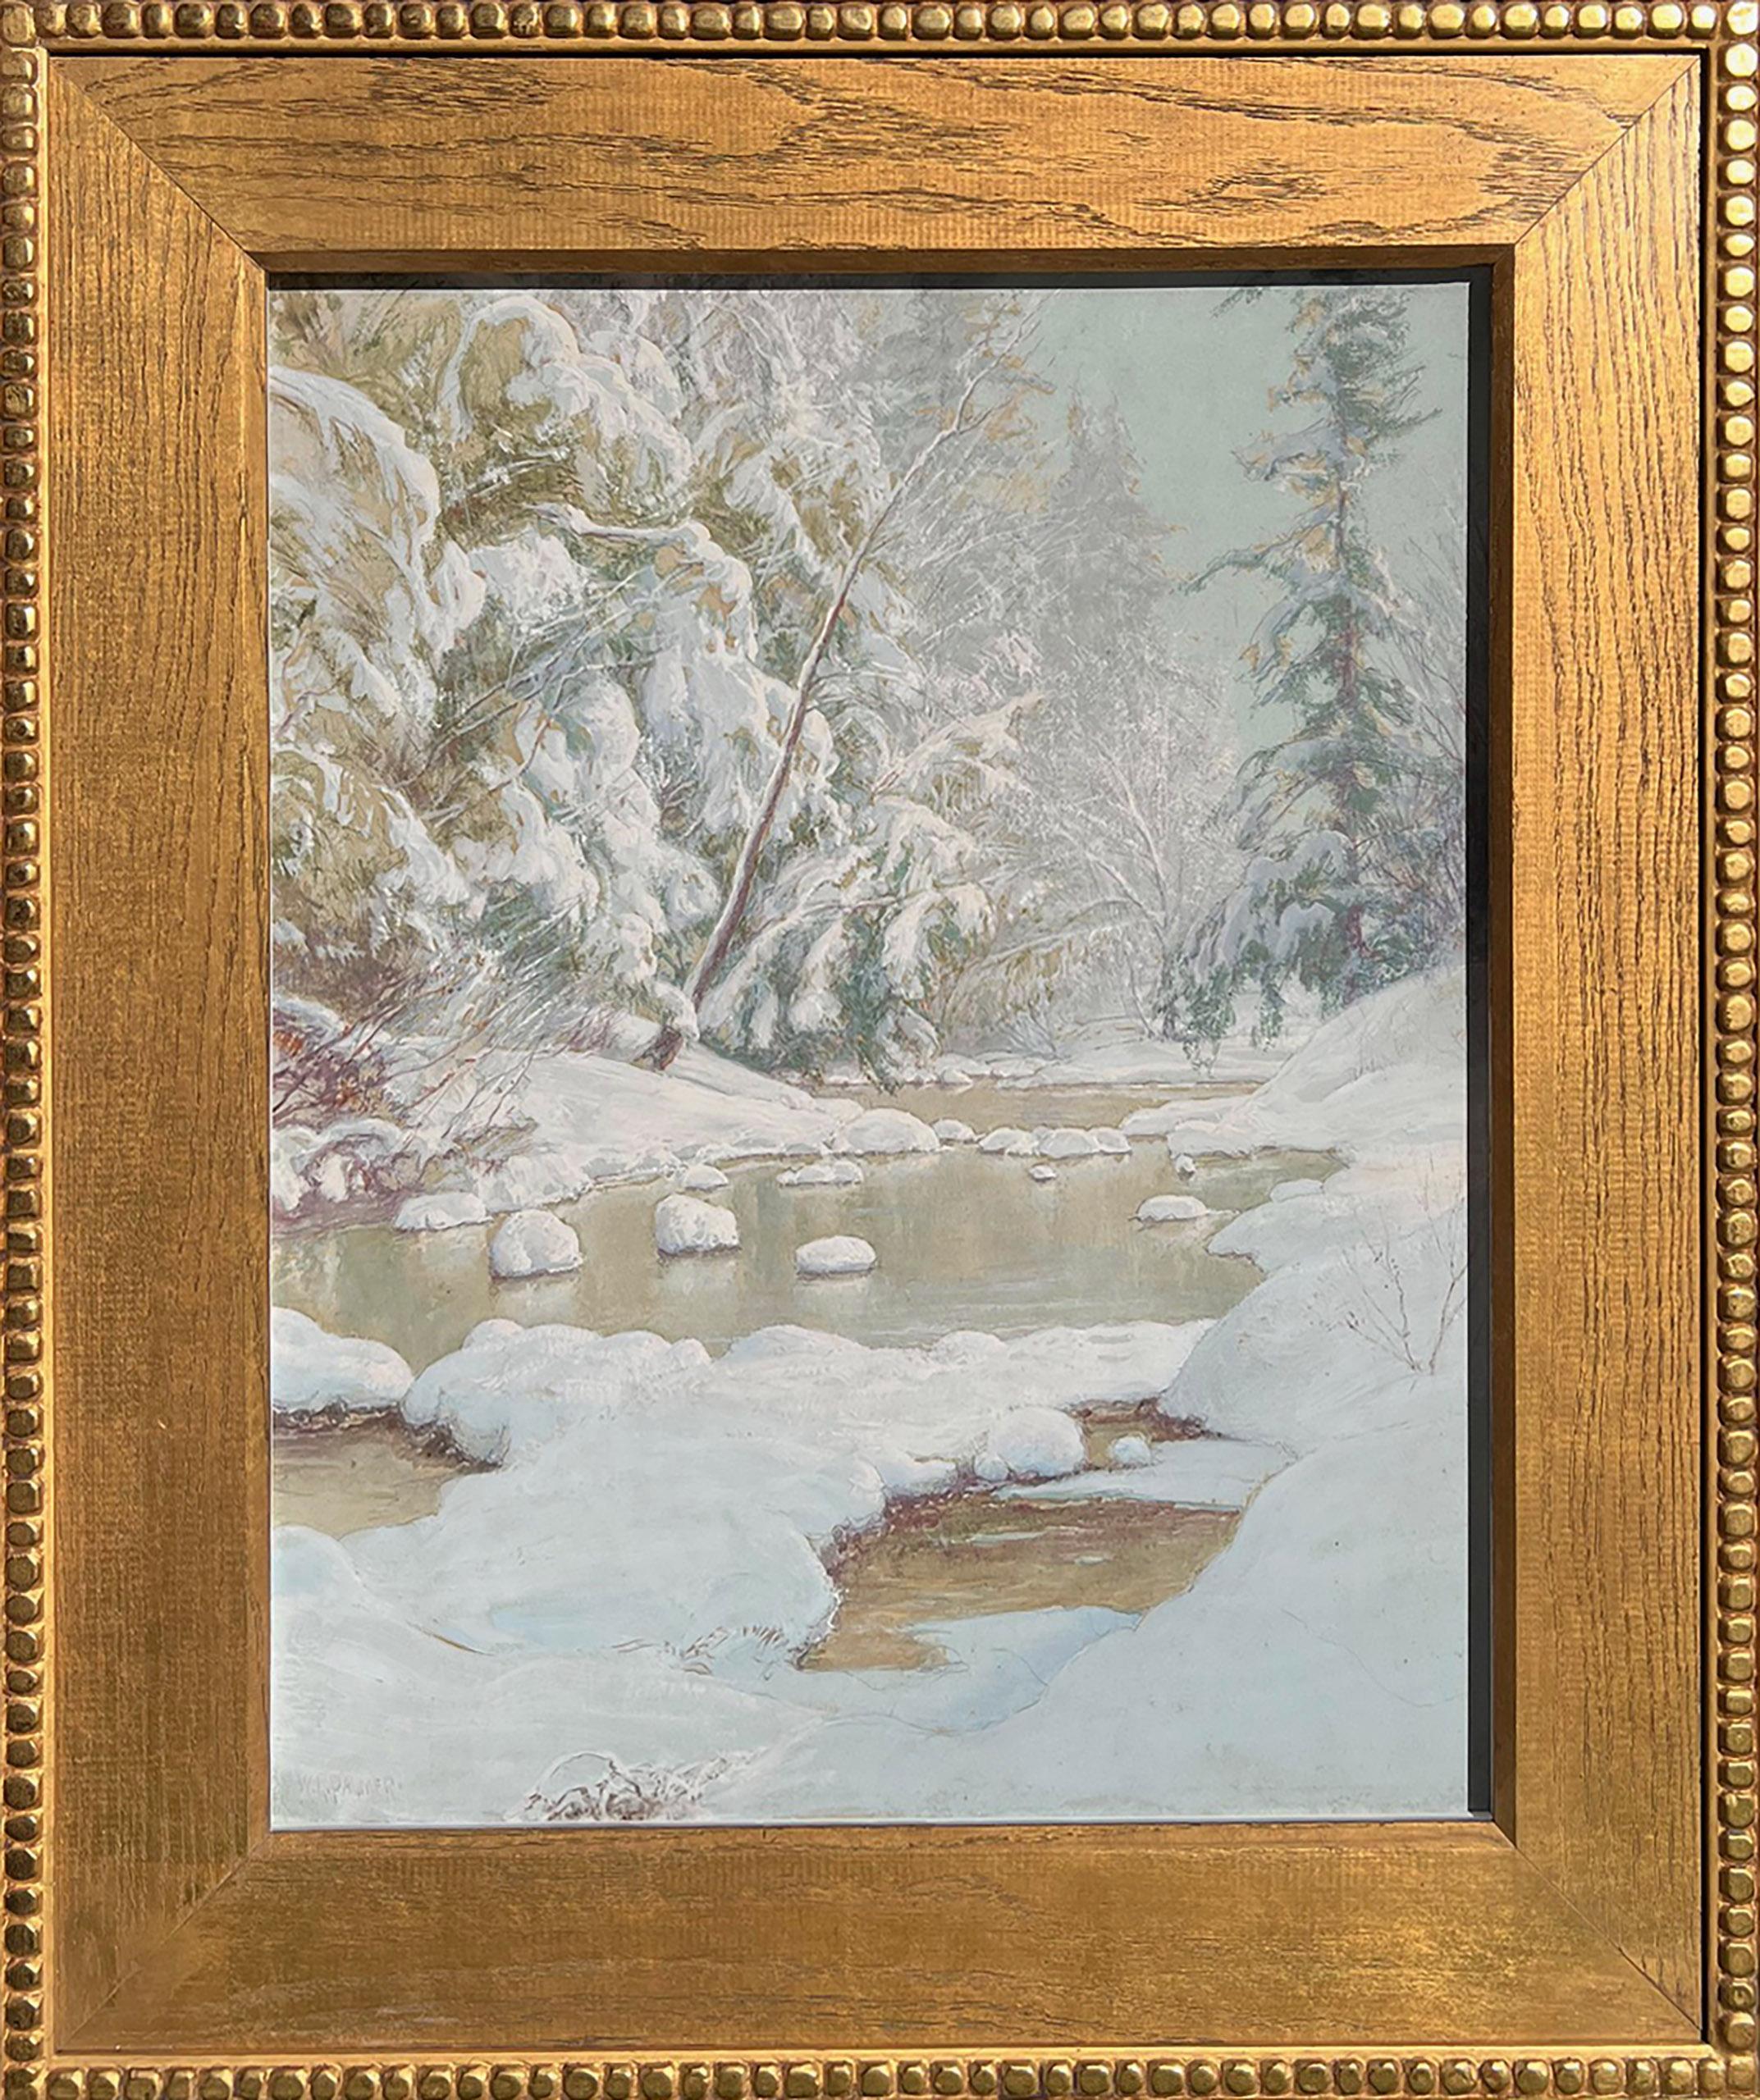 Winter Stream by Walter Launt Palmer (American, 1854-1932)